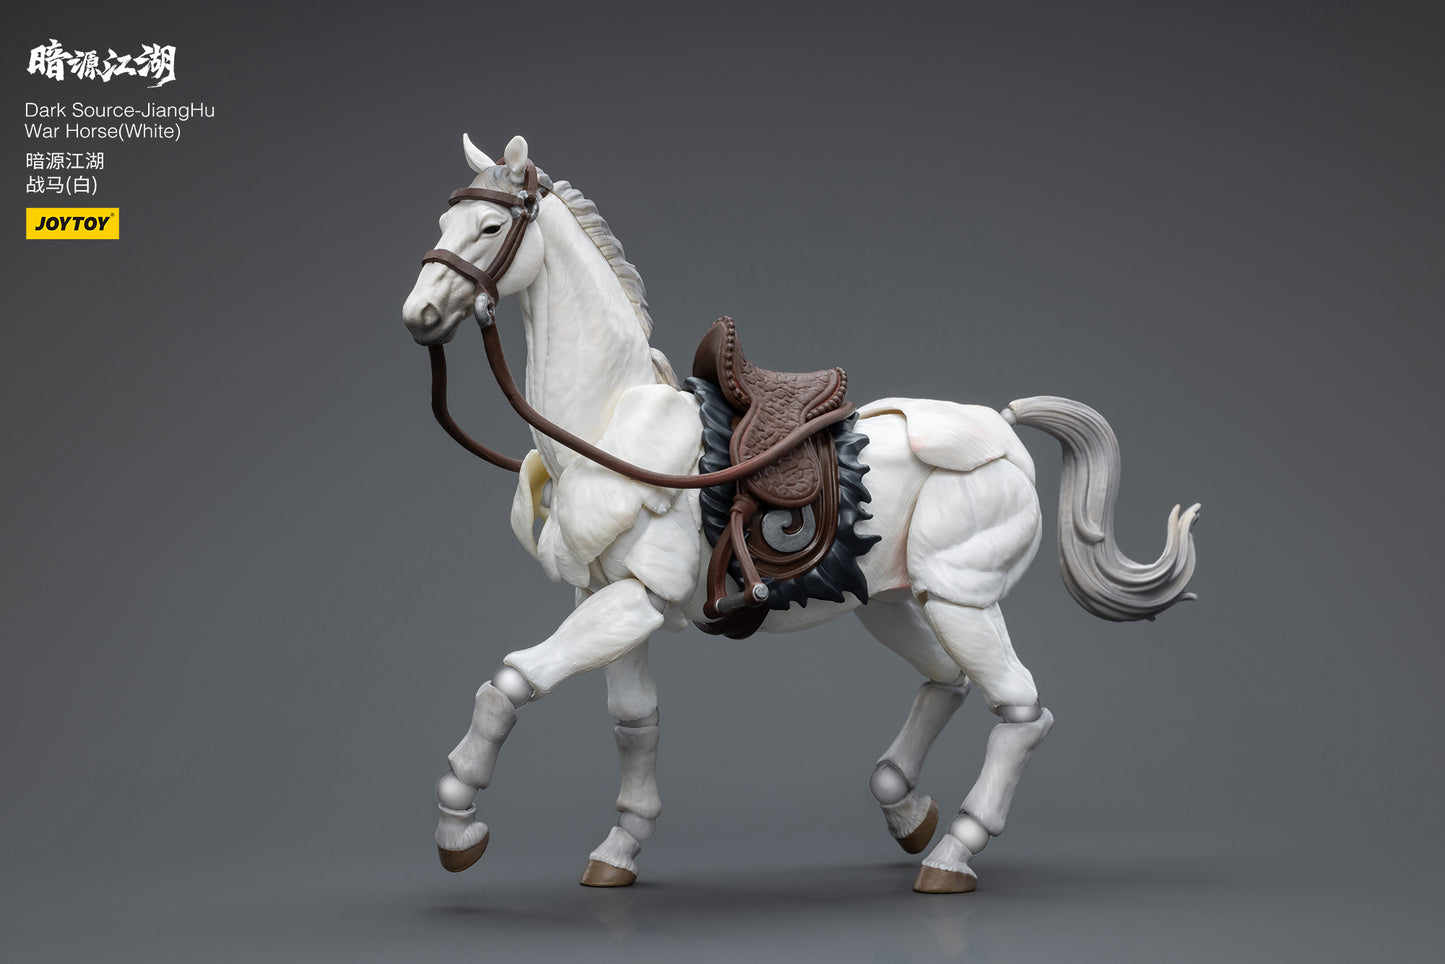 Dark Source - JiangHu War Horse ( White ) - 1/18 Action Figure By JOYTOY